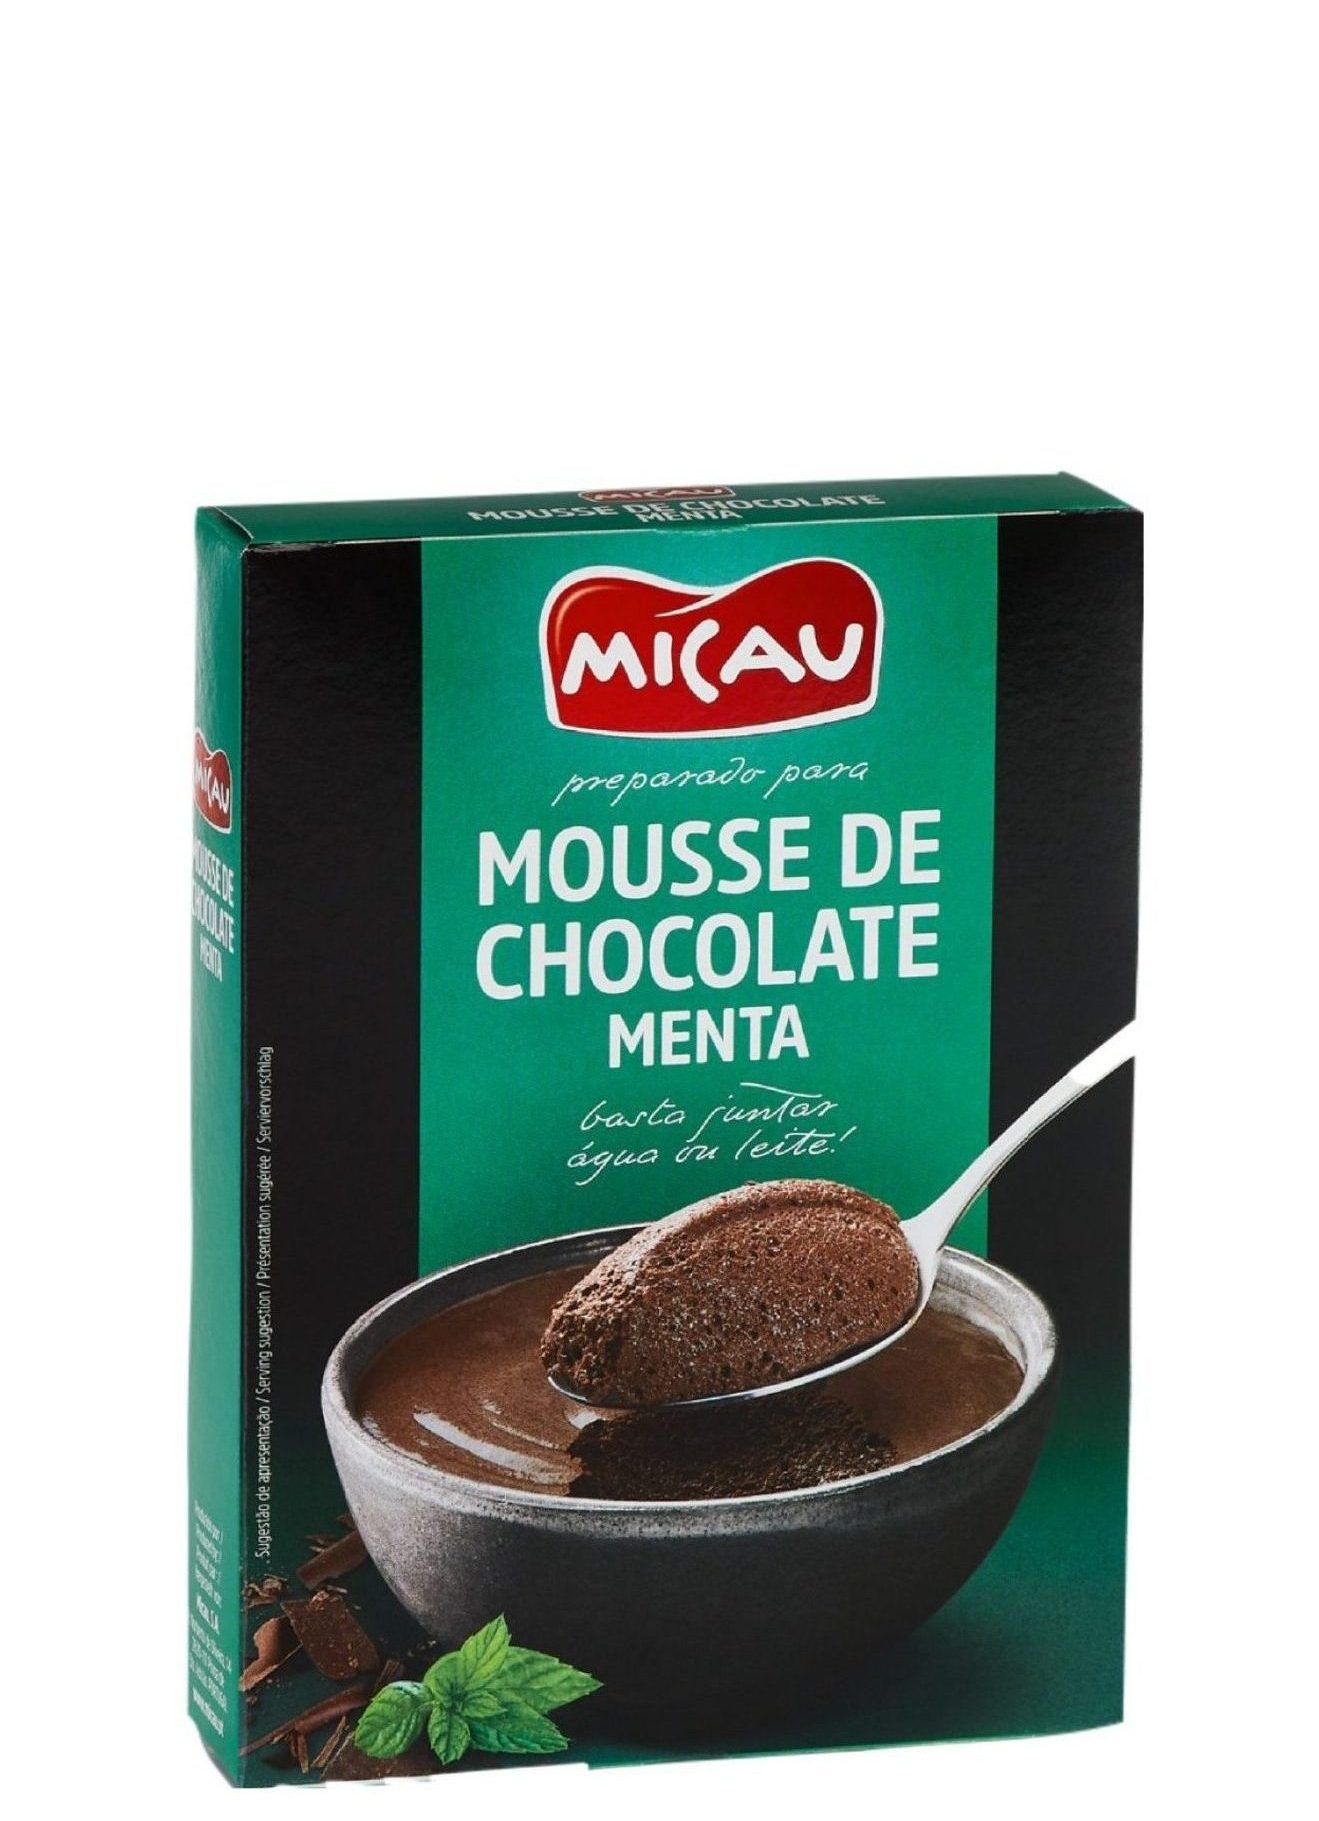 Chocolate & Mint Mousse